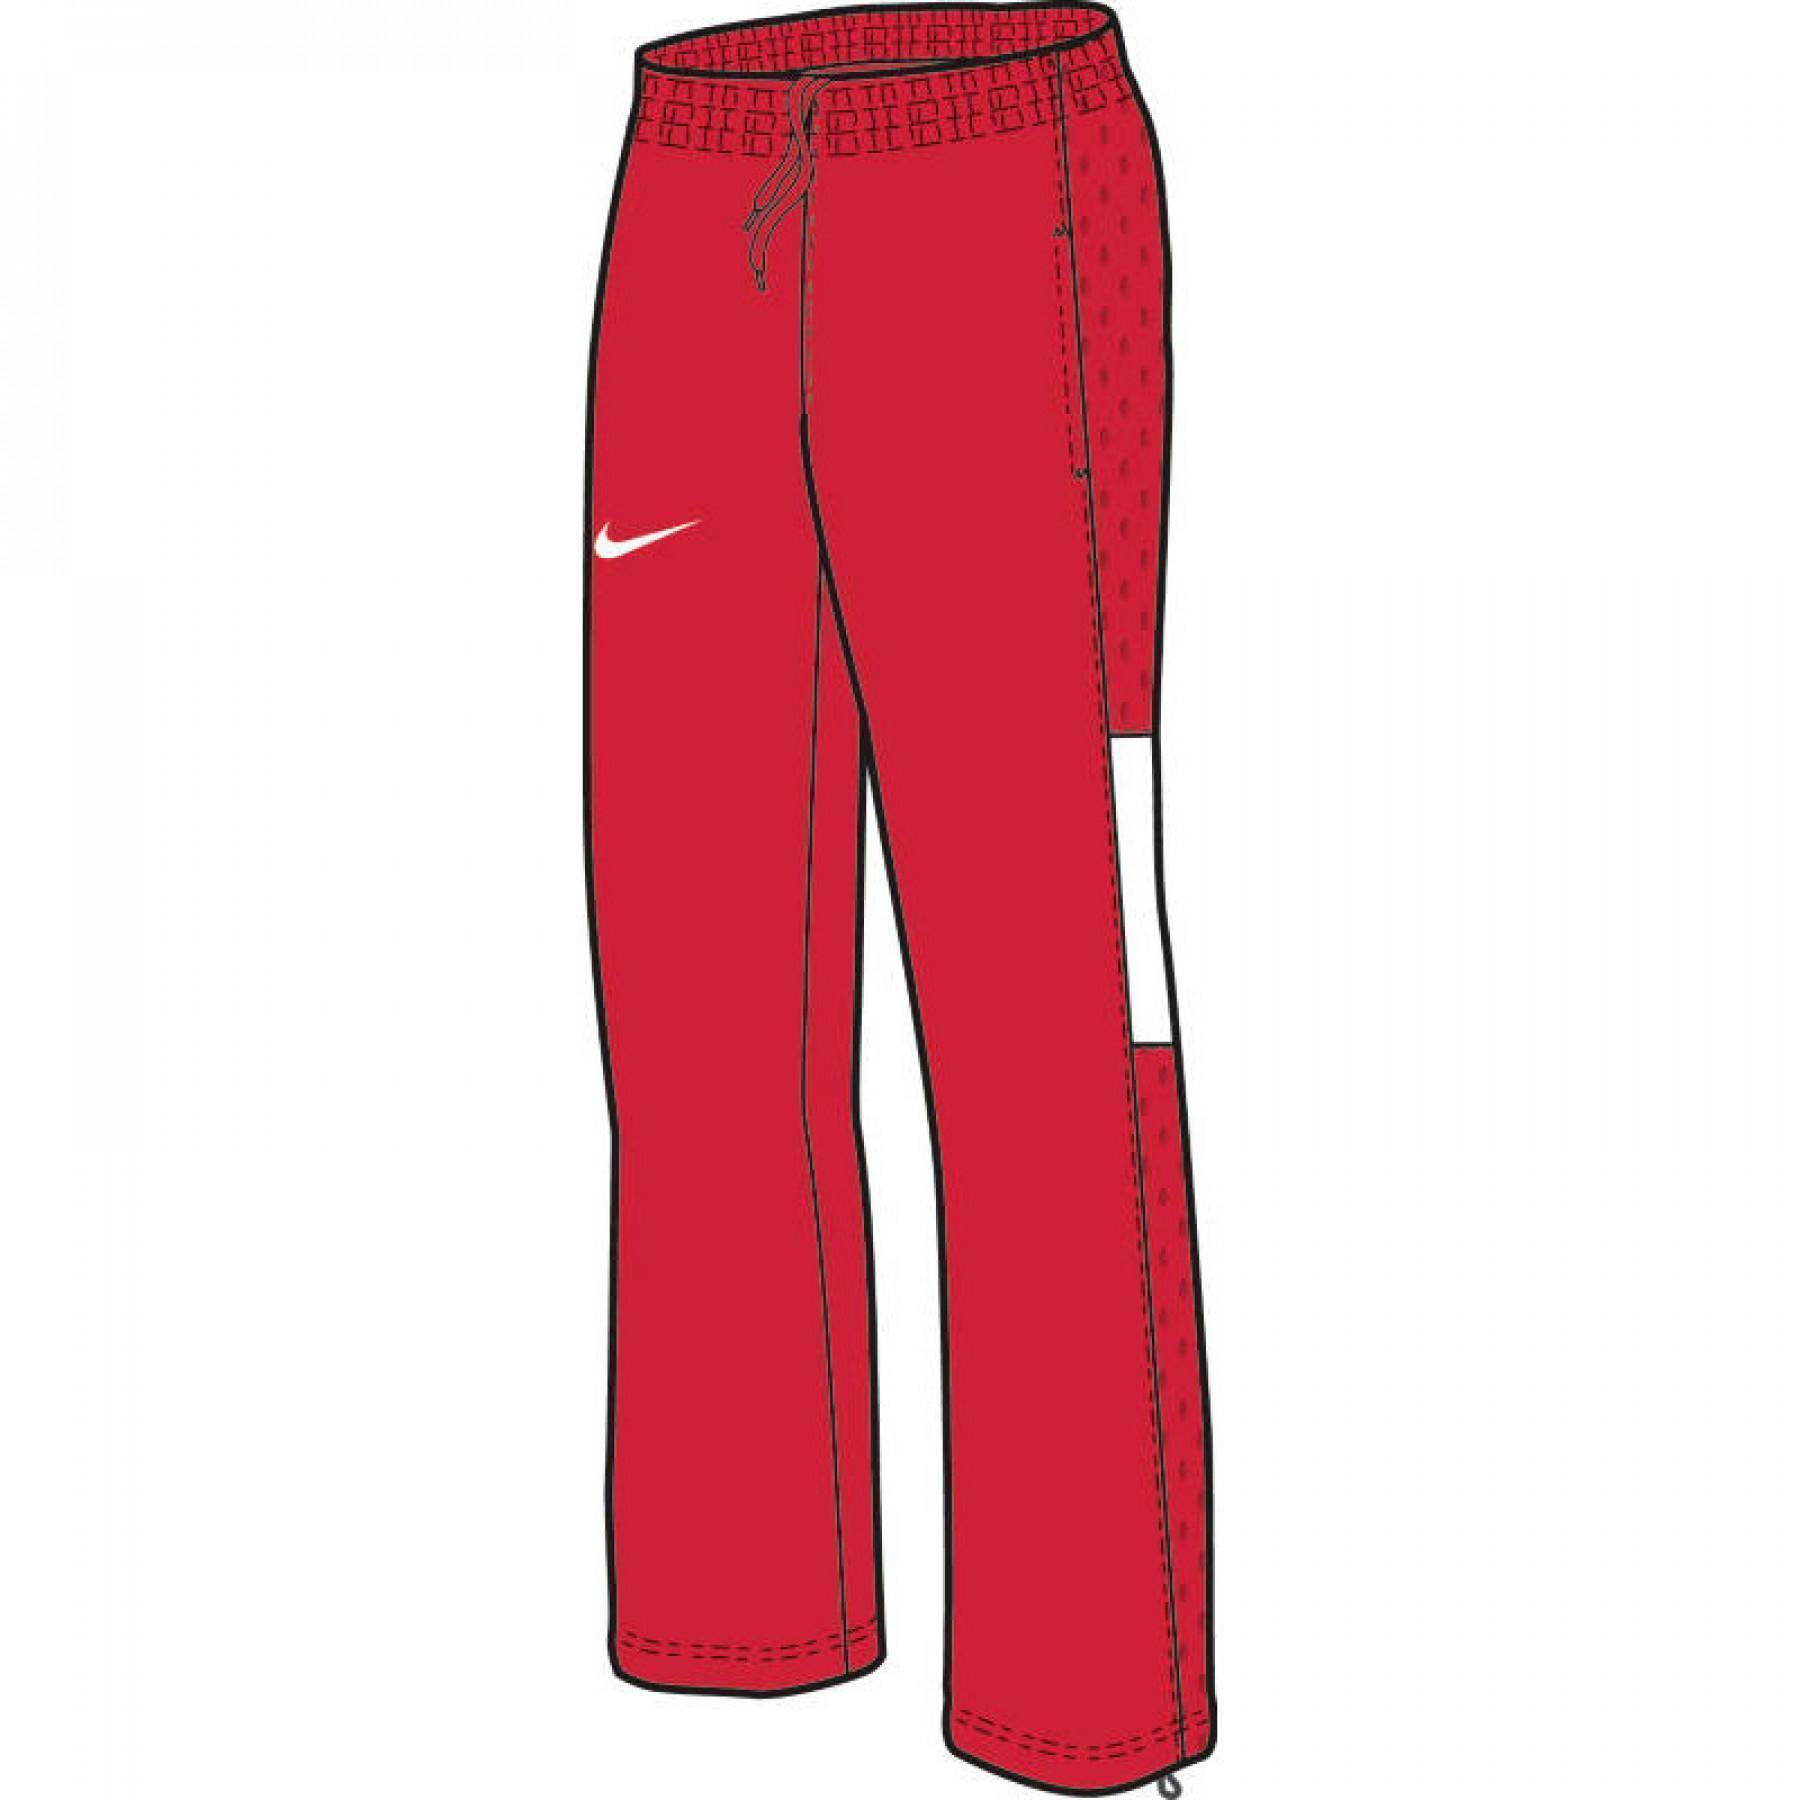 Spodnie damskie Nike Rivalry